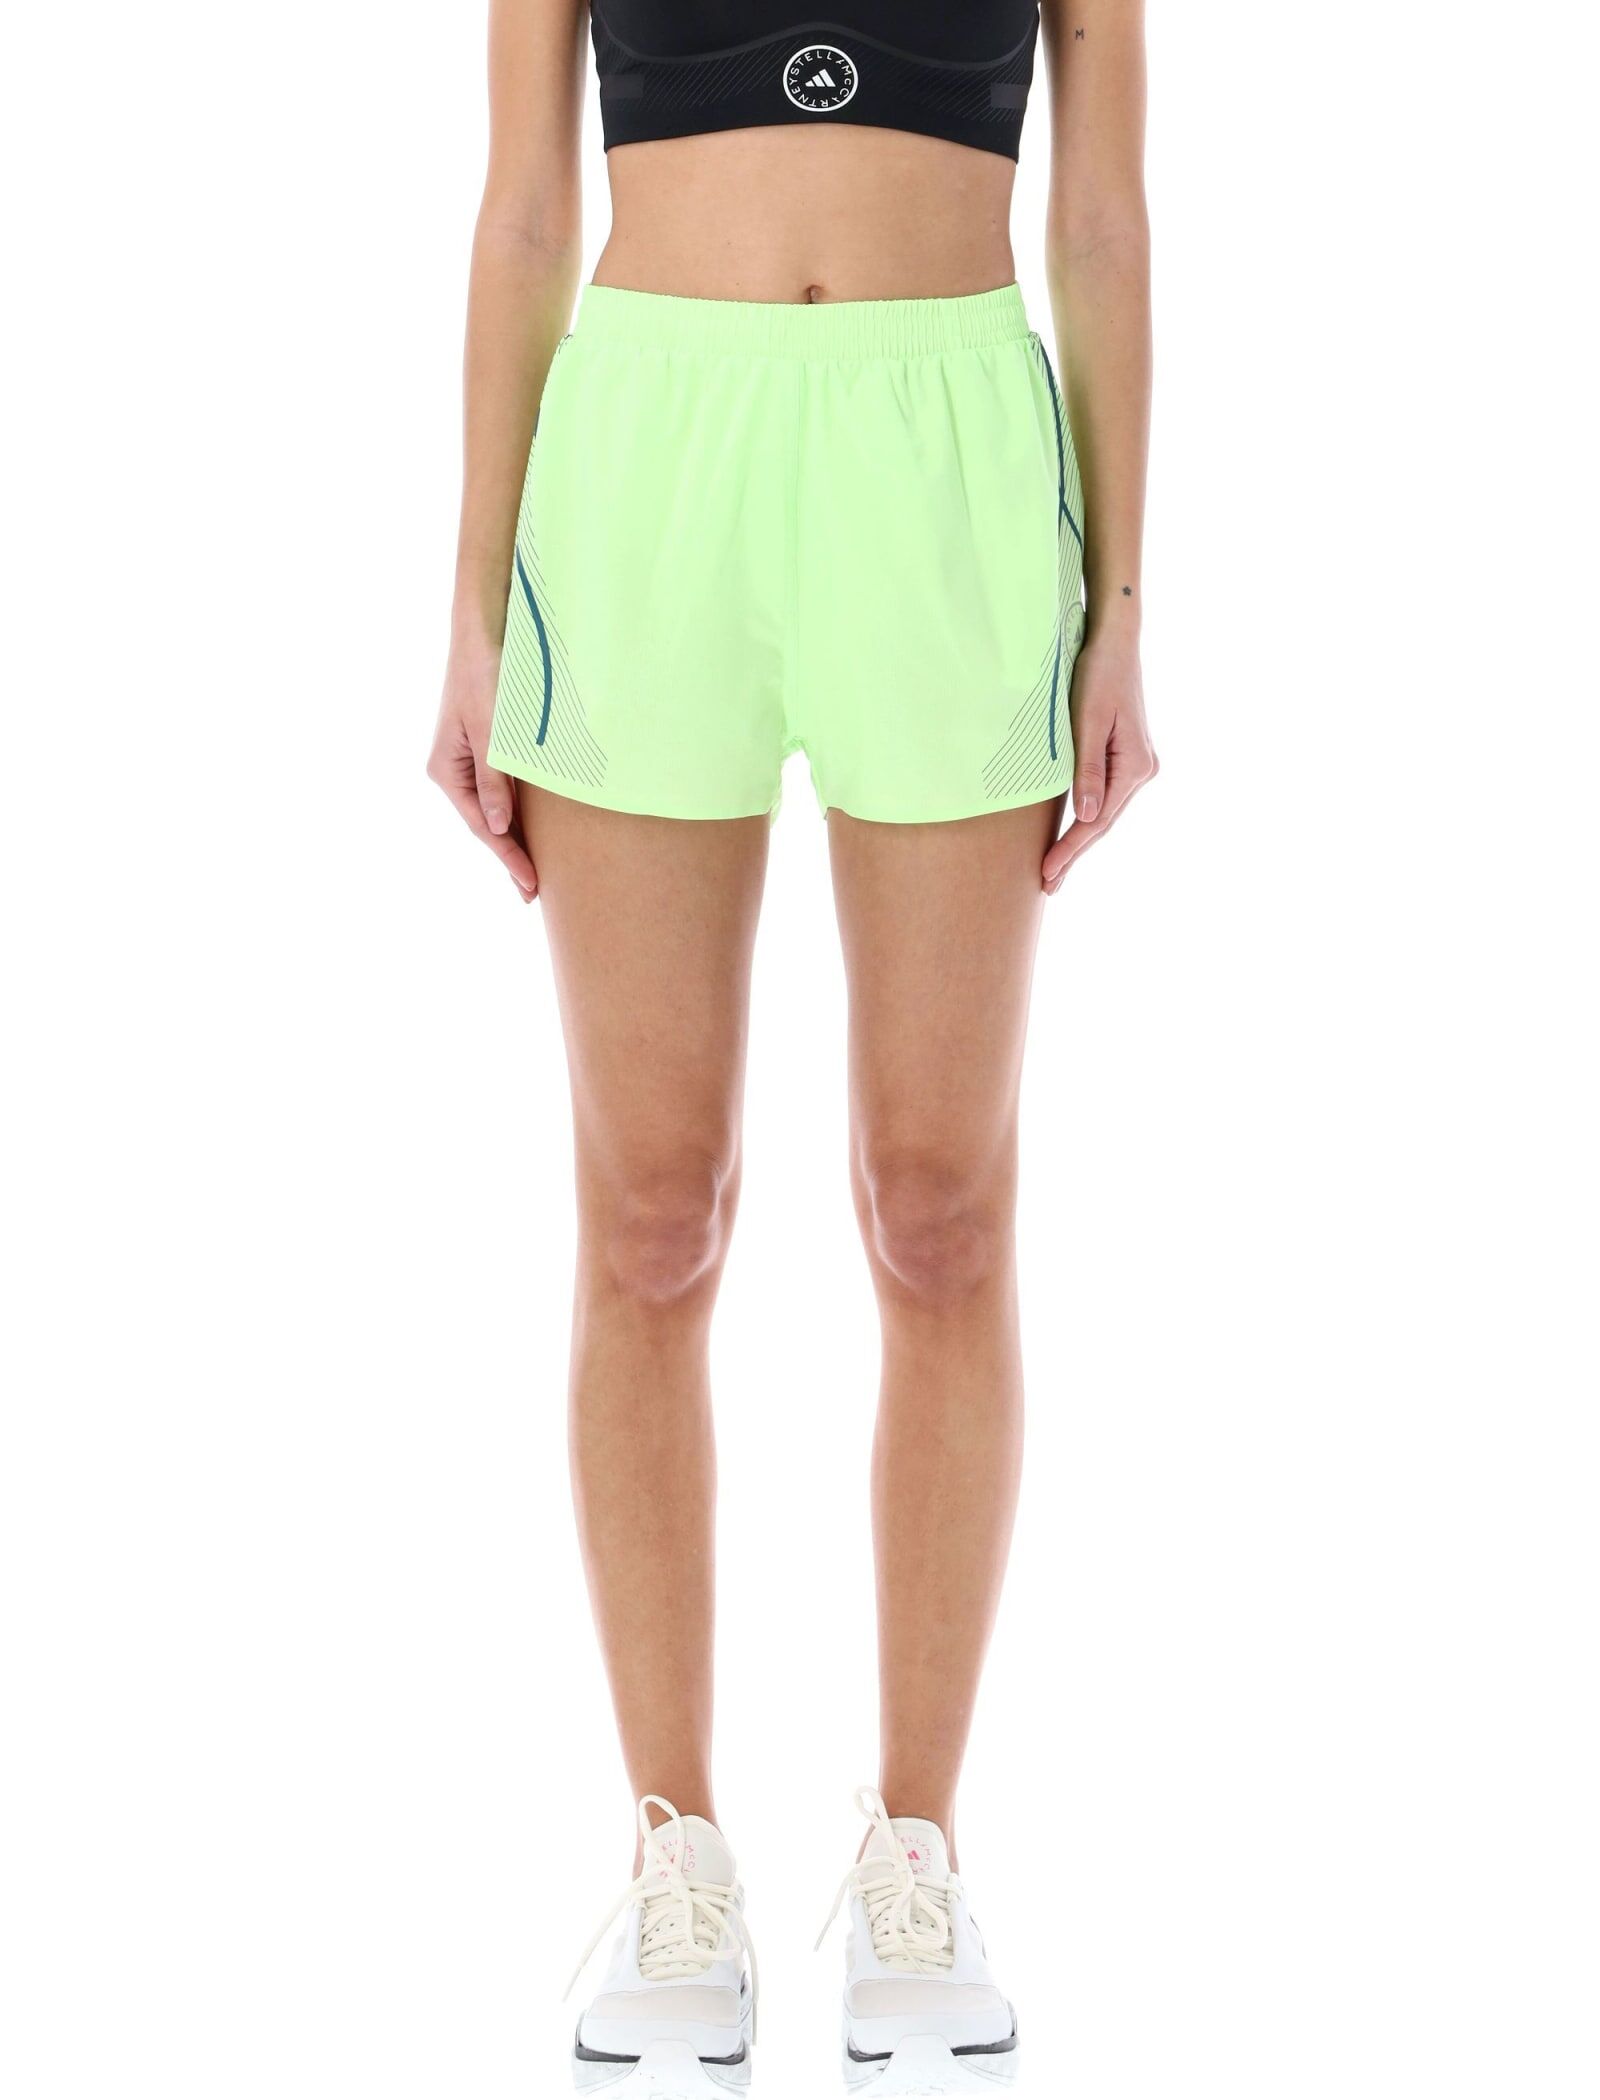 Adidas by Stella McCartney Truepace Running Shorts - 0GREEN SPARK - female - Size: Extra Small